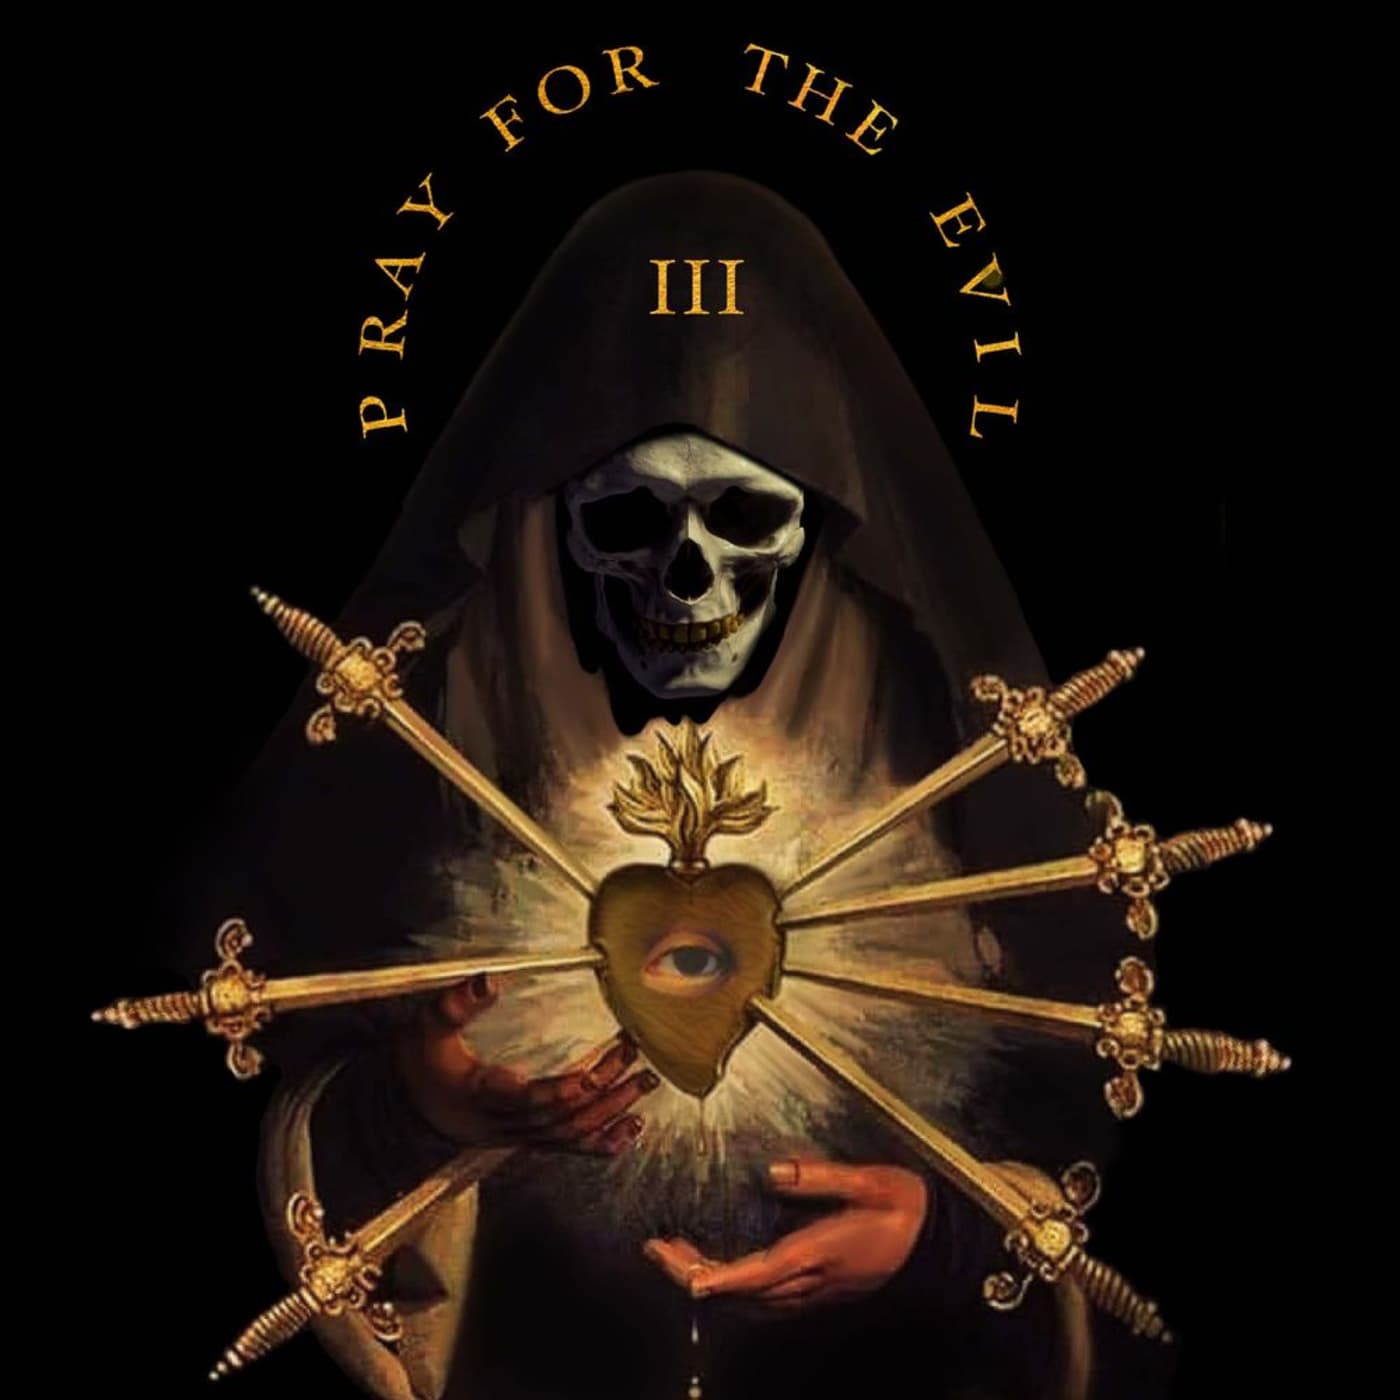 flee lord new album cover art